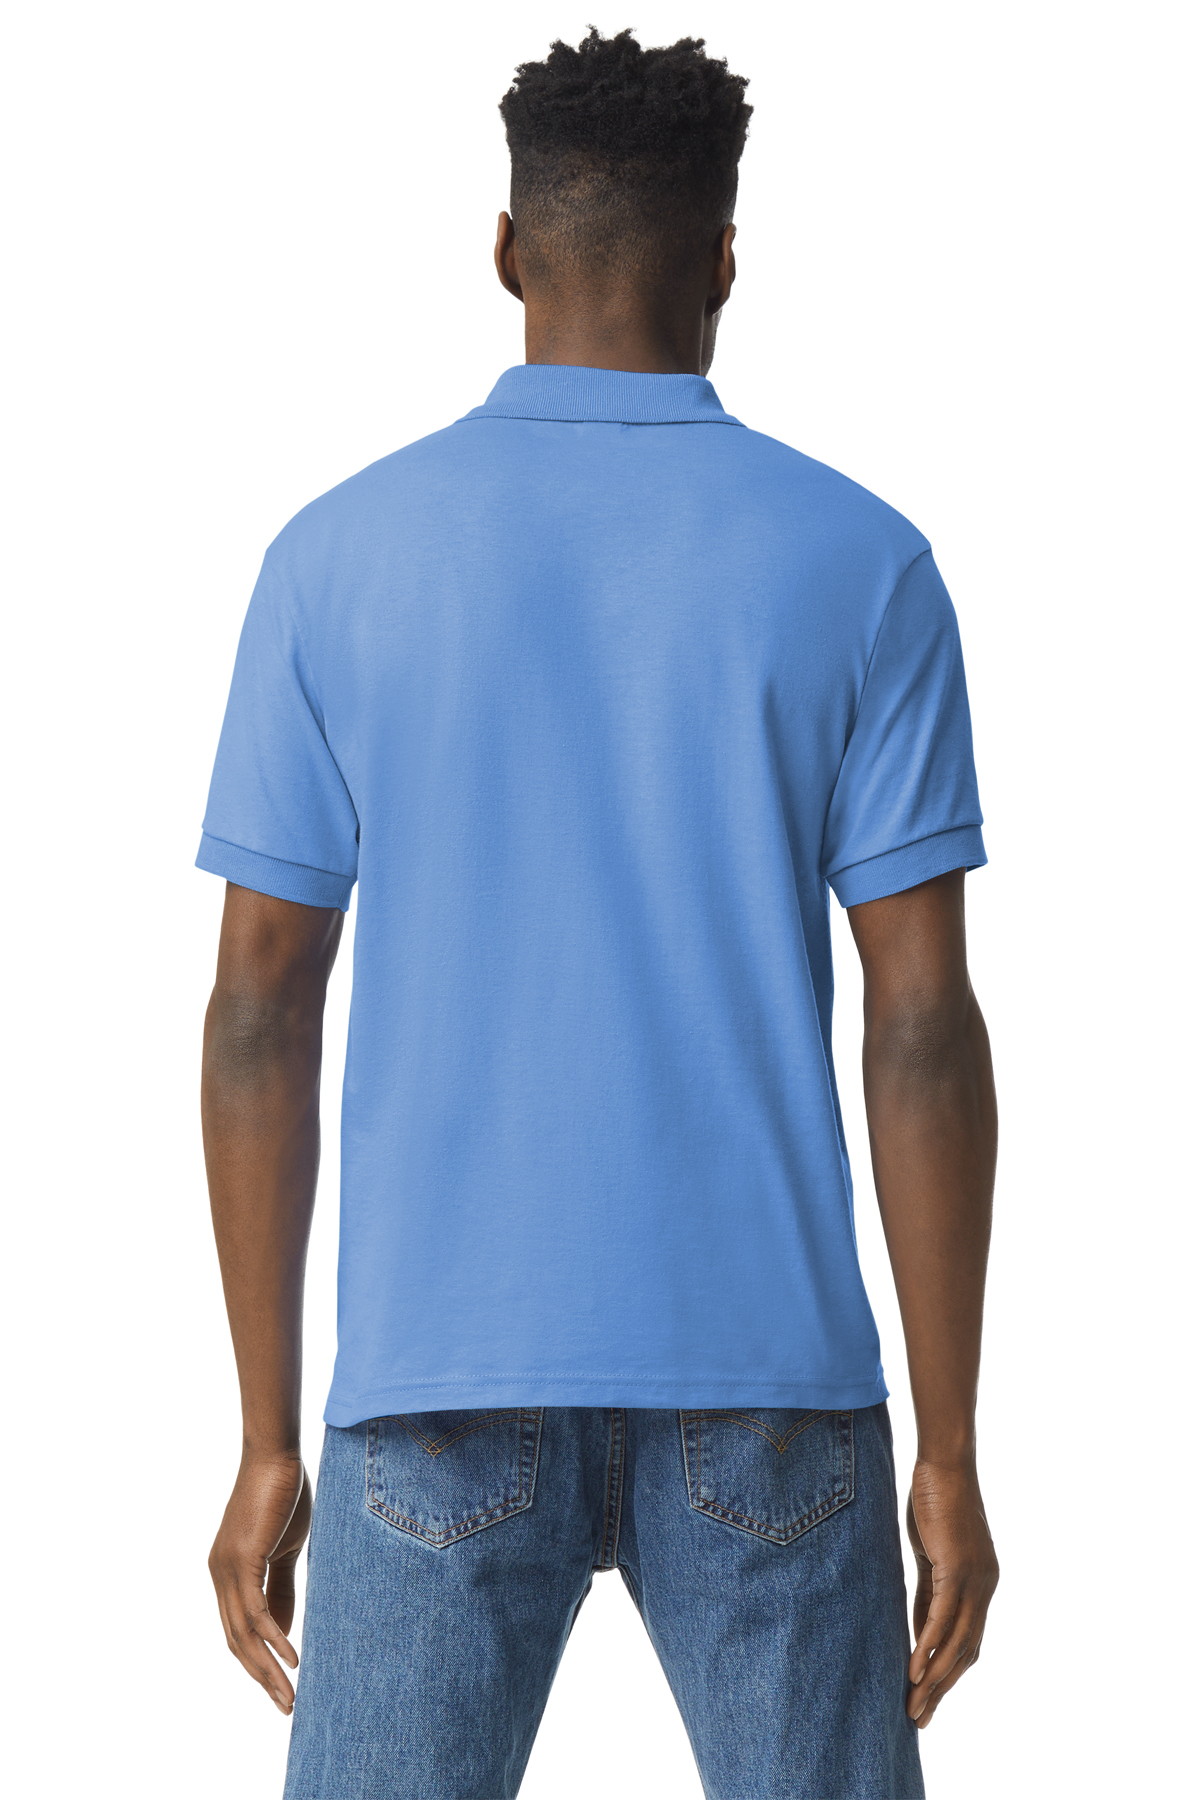 Gildan - DryBlend 6-Ounce Jersey Knit Sport Shirt | Product | Company ...